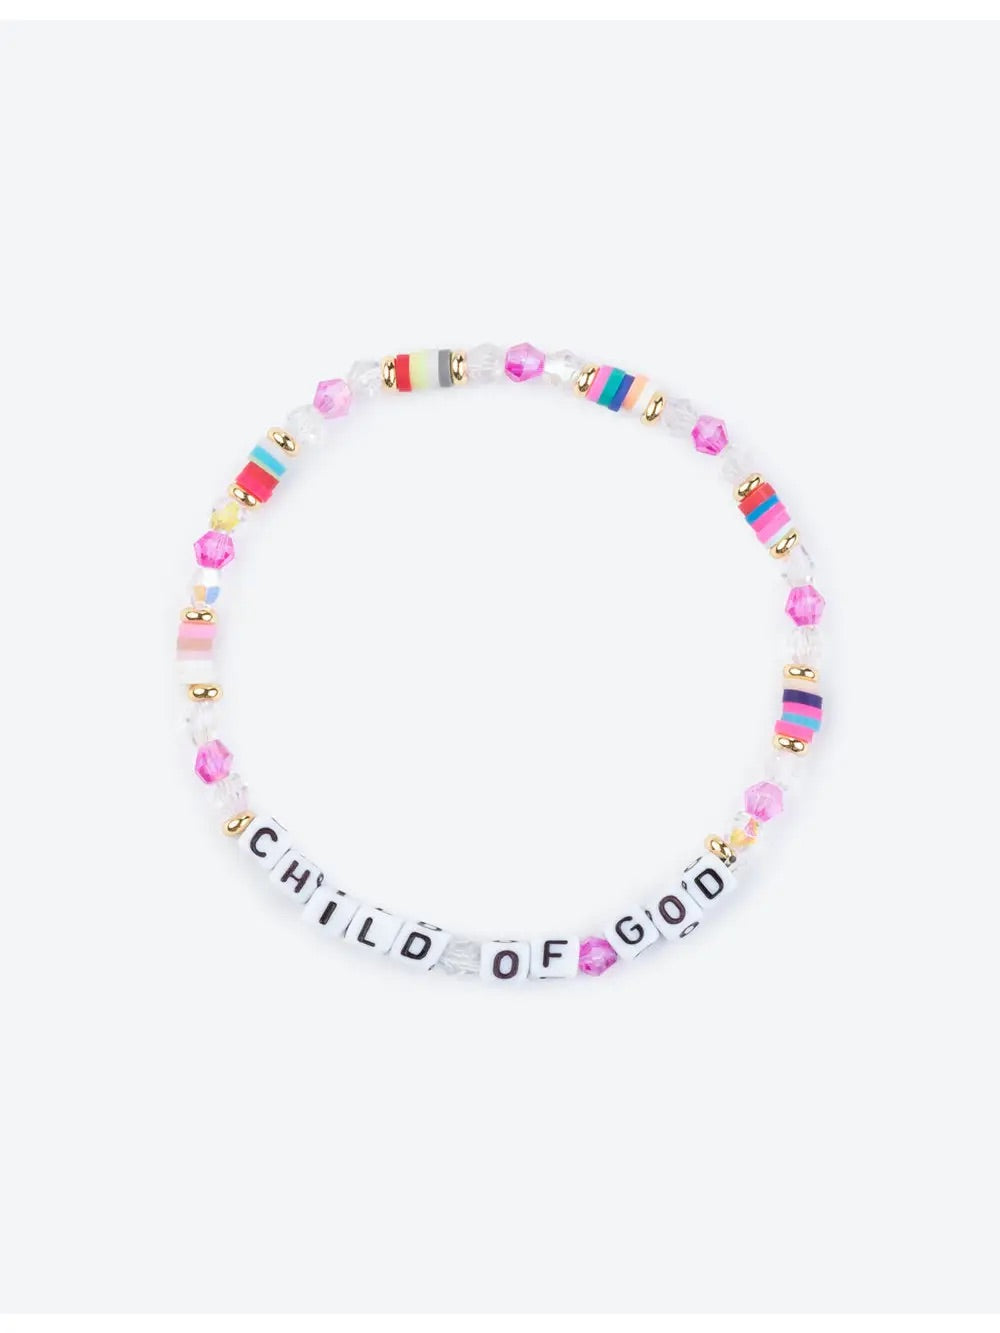 Child of God Bracelet